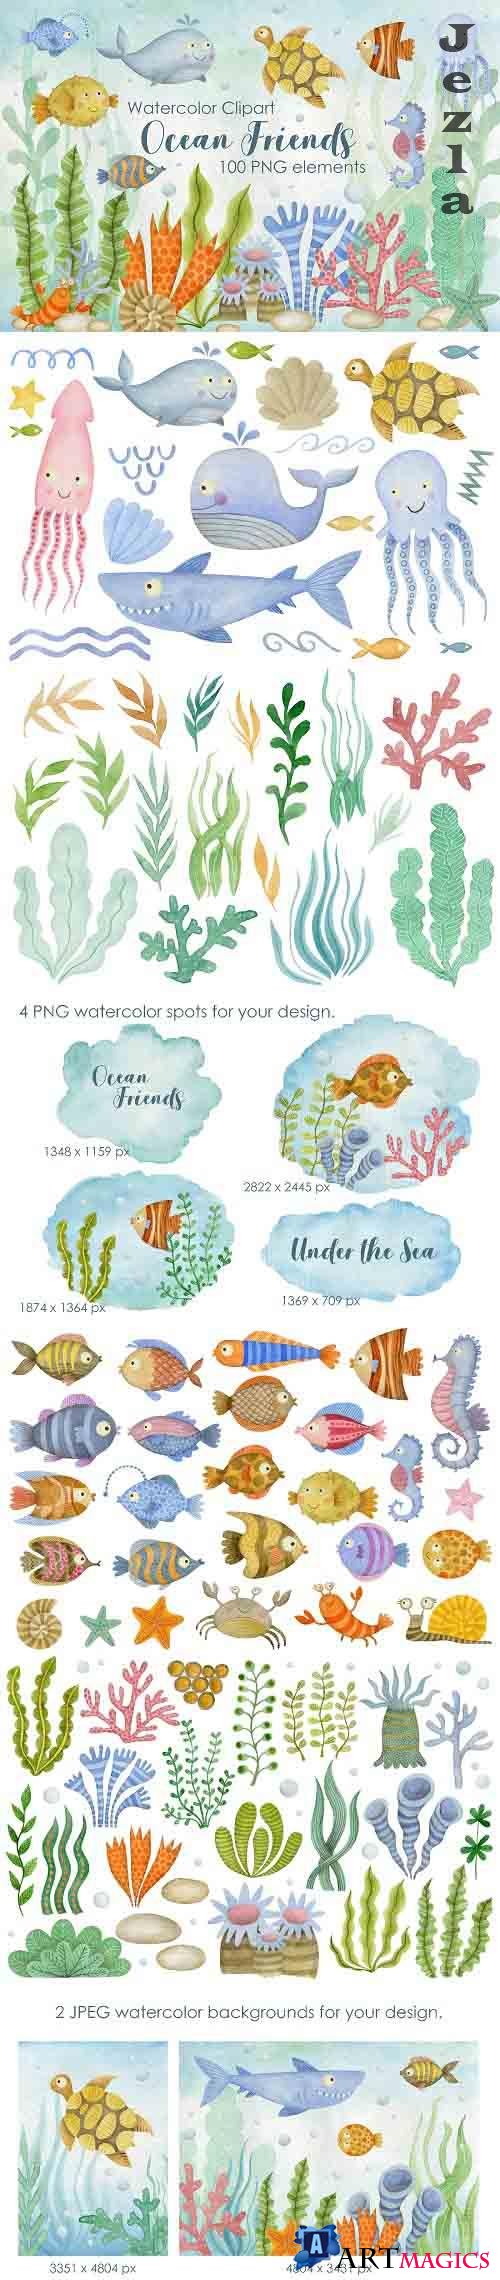 Watercolor Sea Animals Friends collection - 1358662